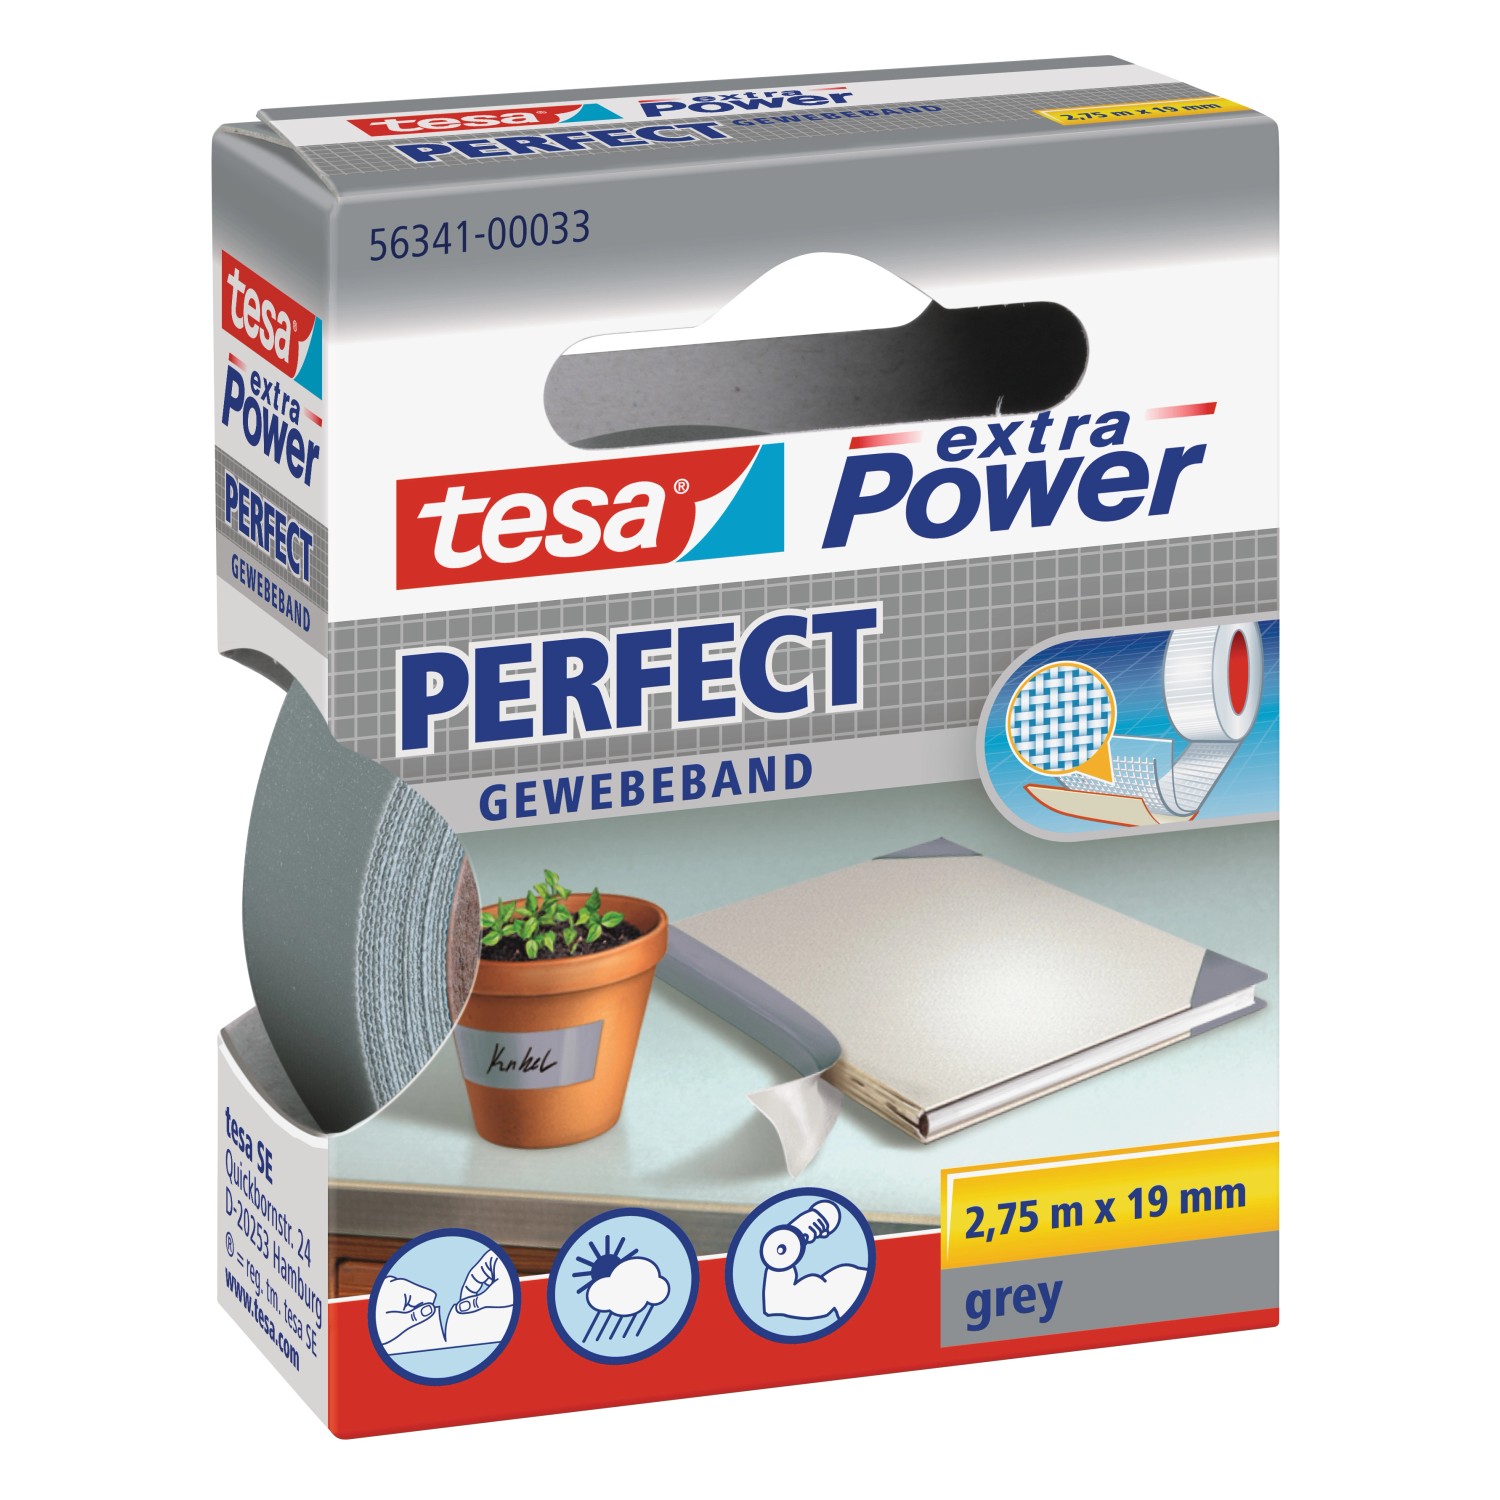 Tesa Extra Power Perfect Gewebeband Grau 2,75 m x 19 mm